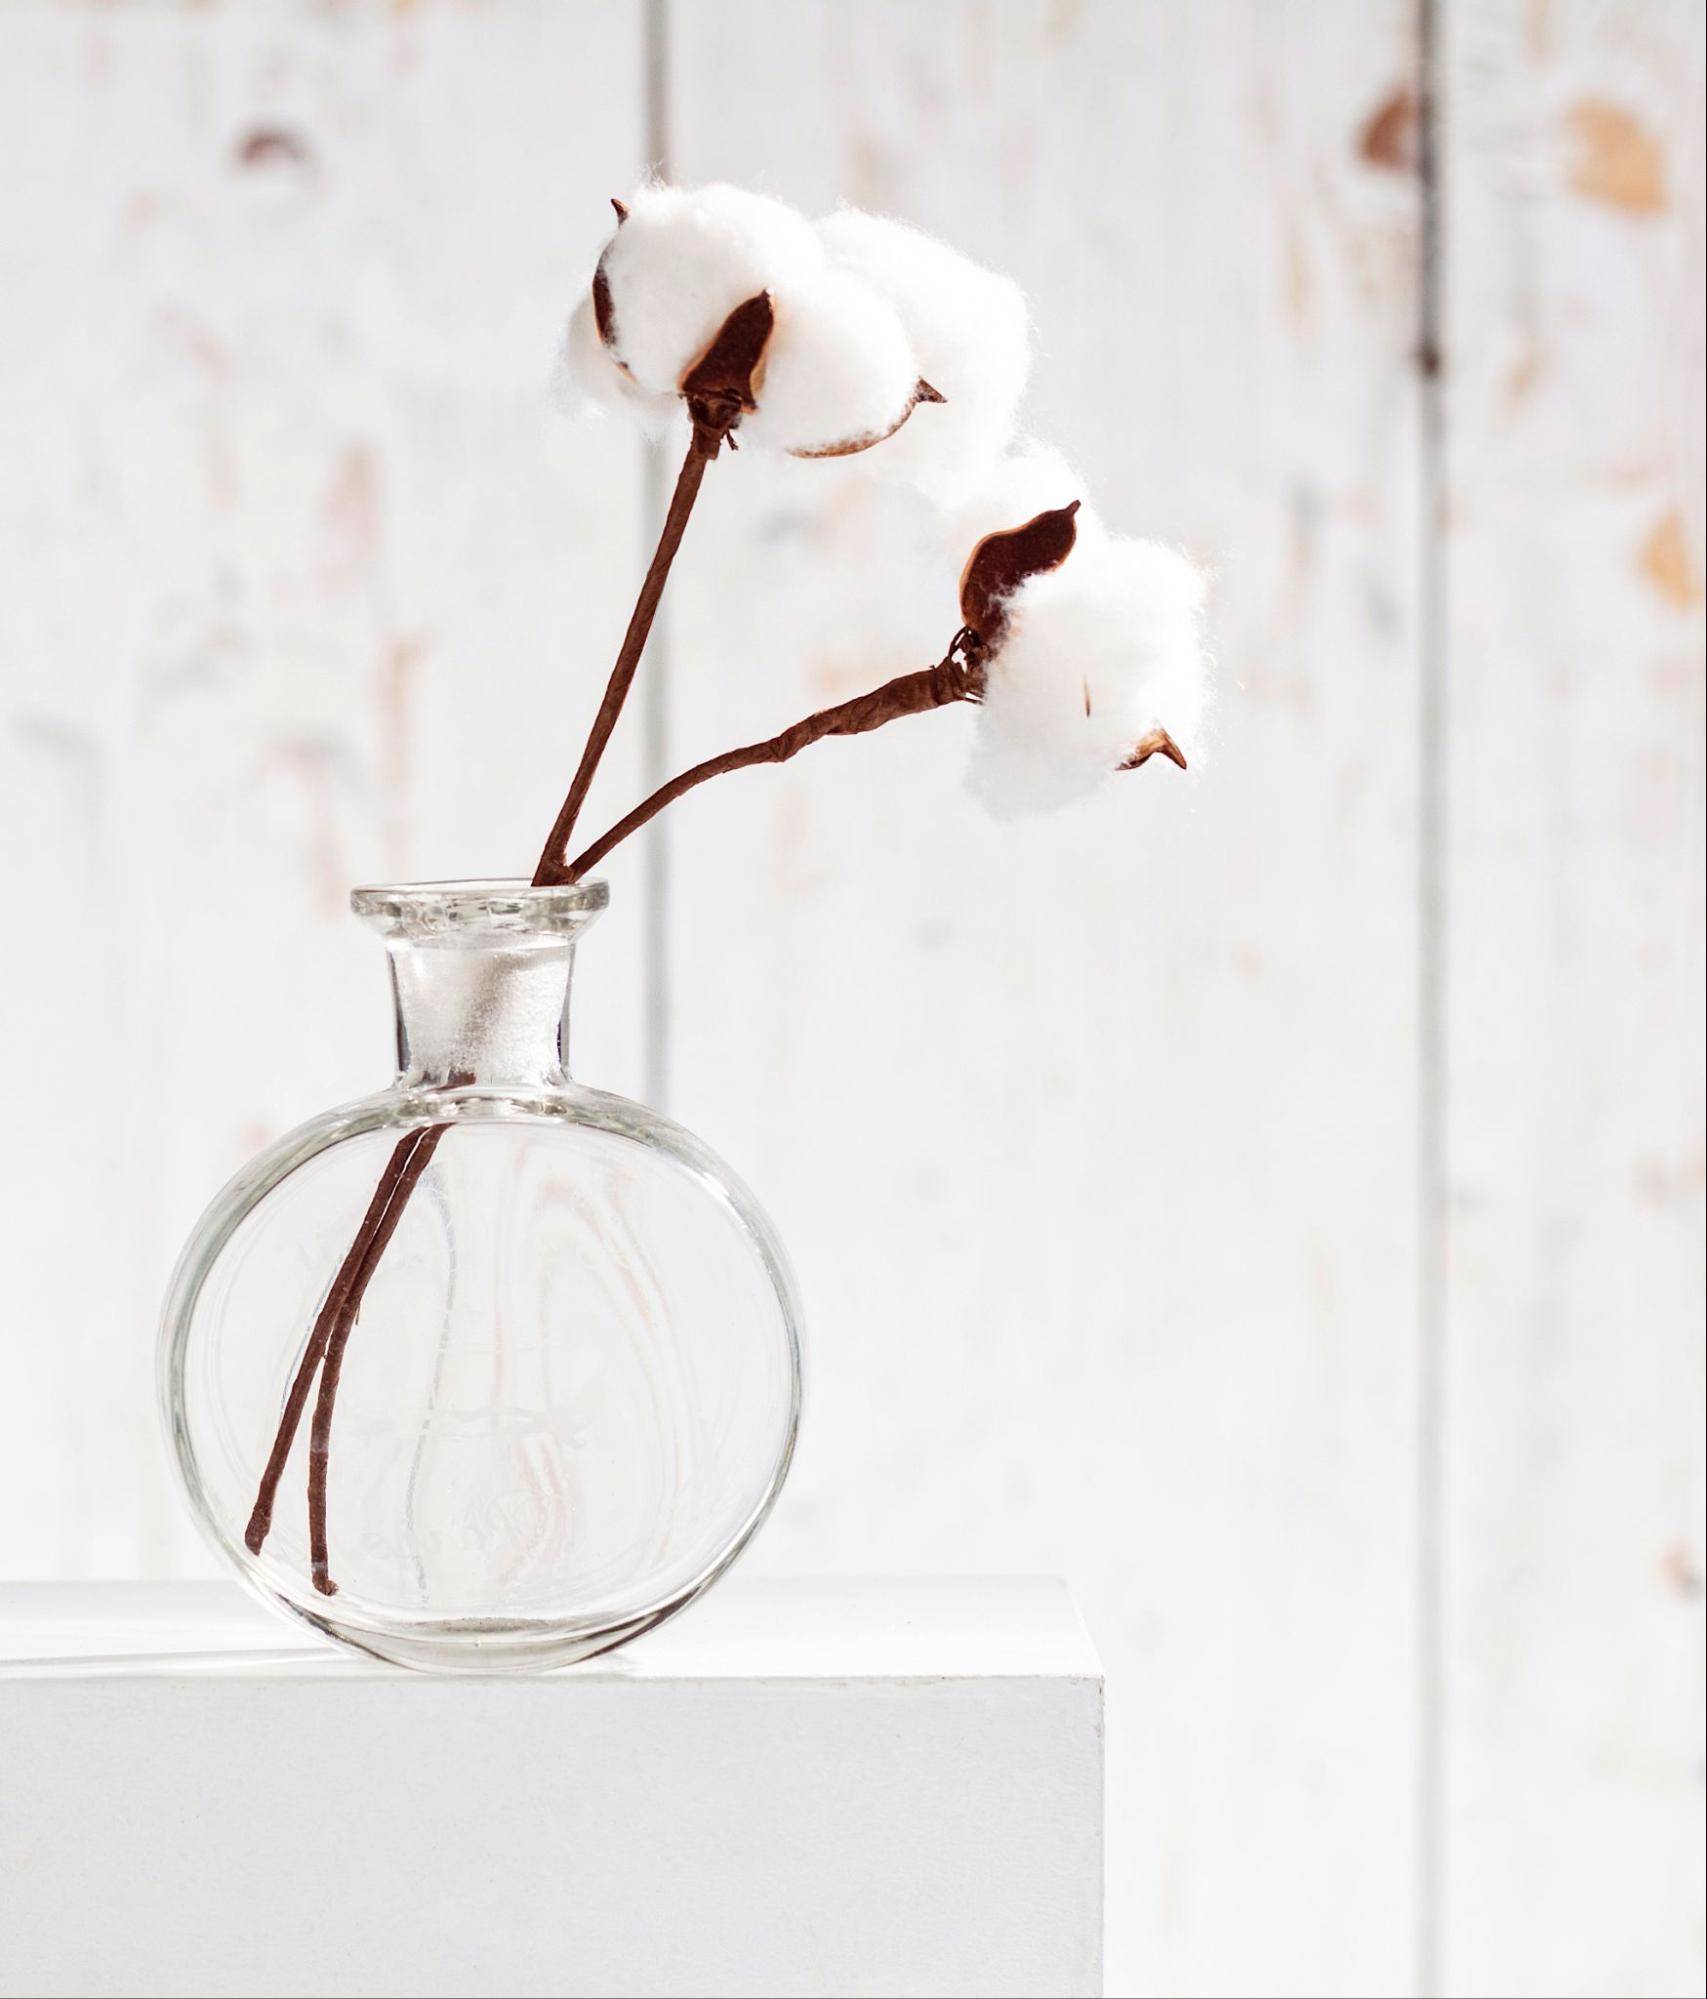 Cotton plant in minimalisitic glass vase